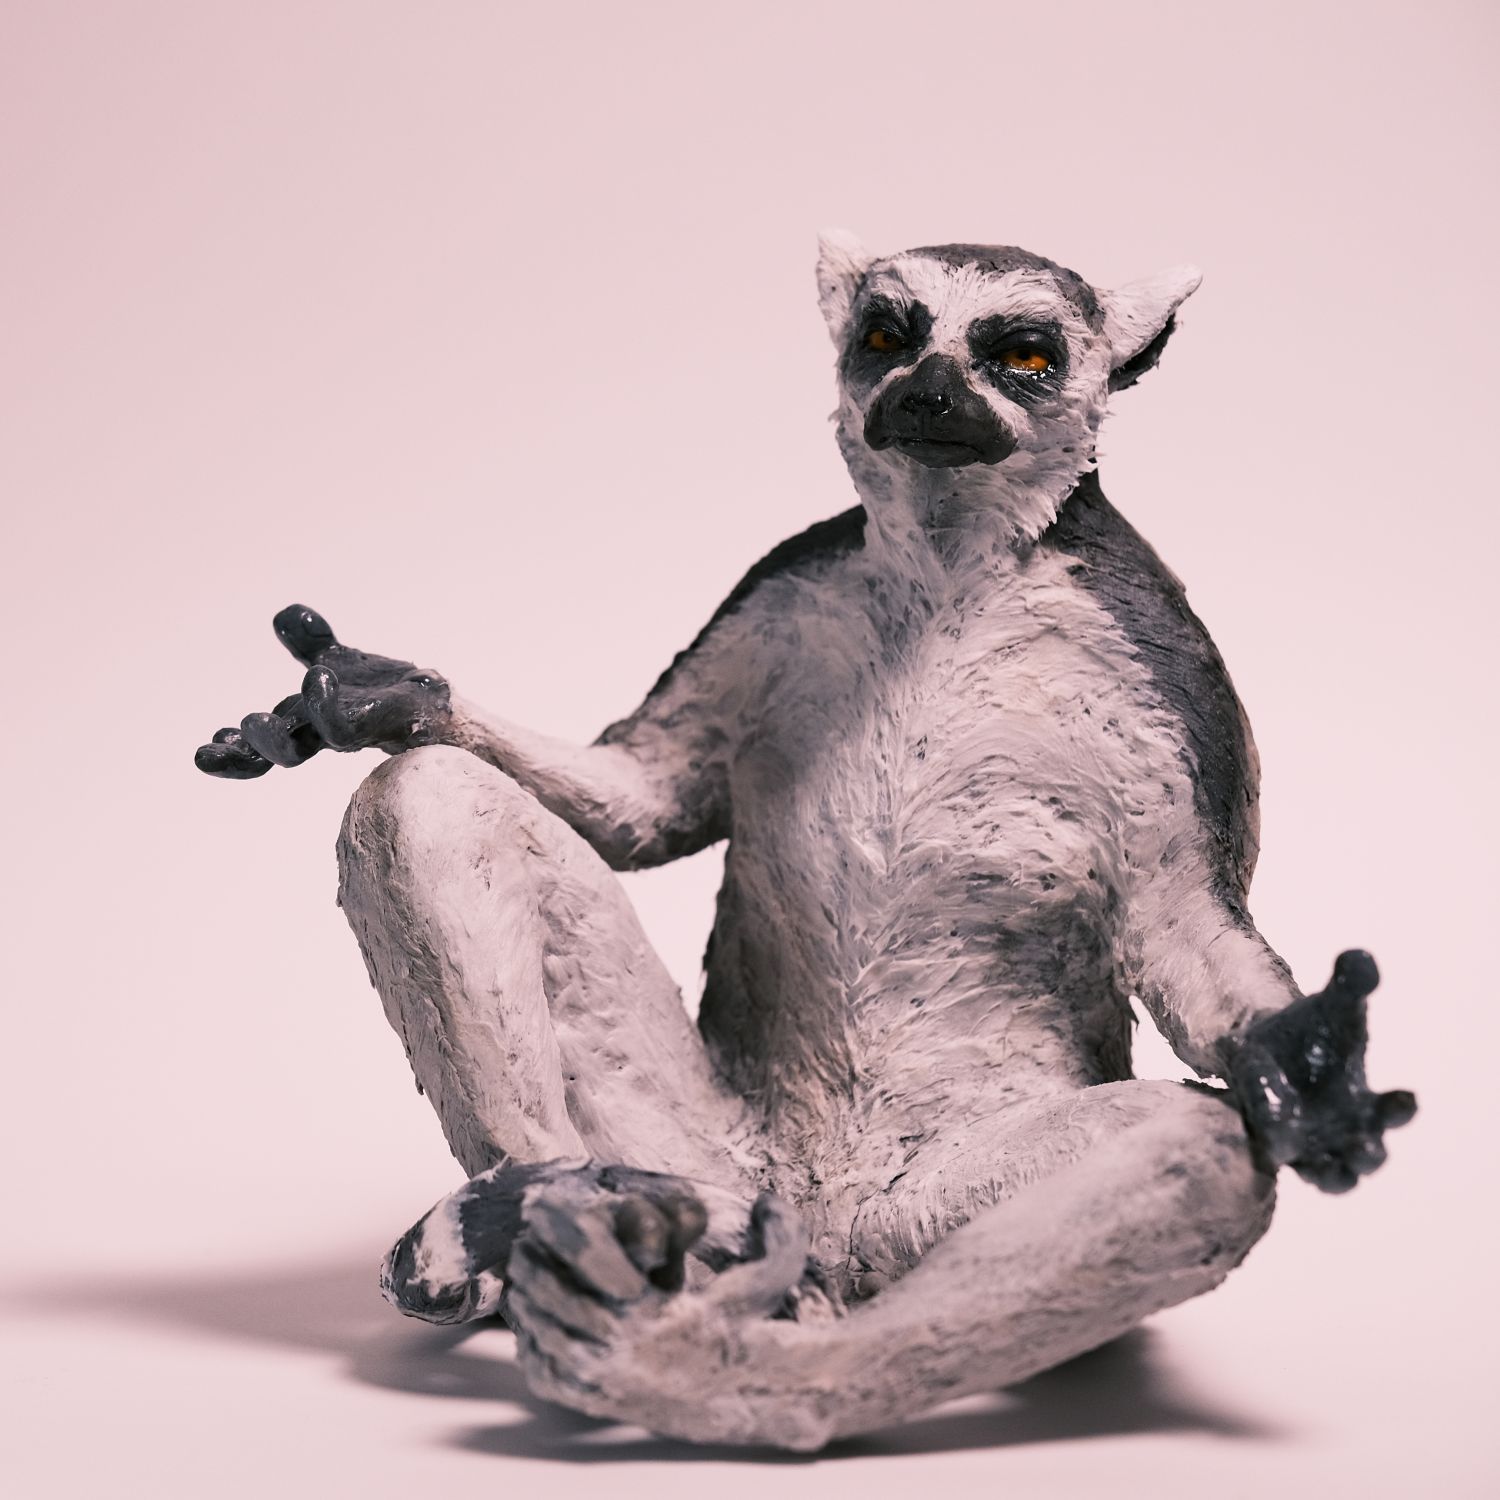 Peidi Wang: Lemur in meditation pose Product Image 1 of 2